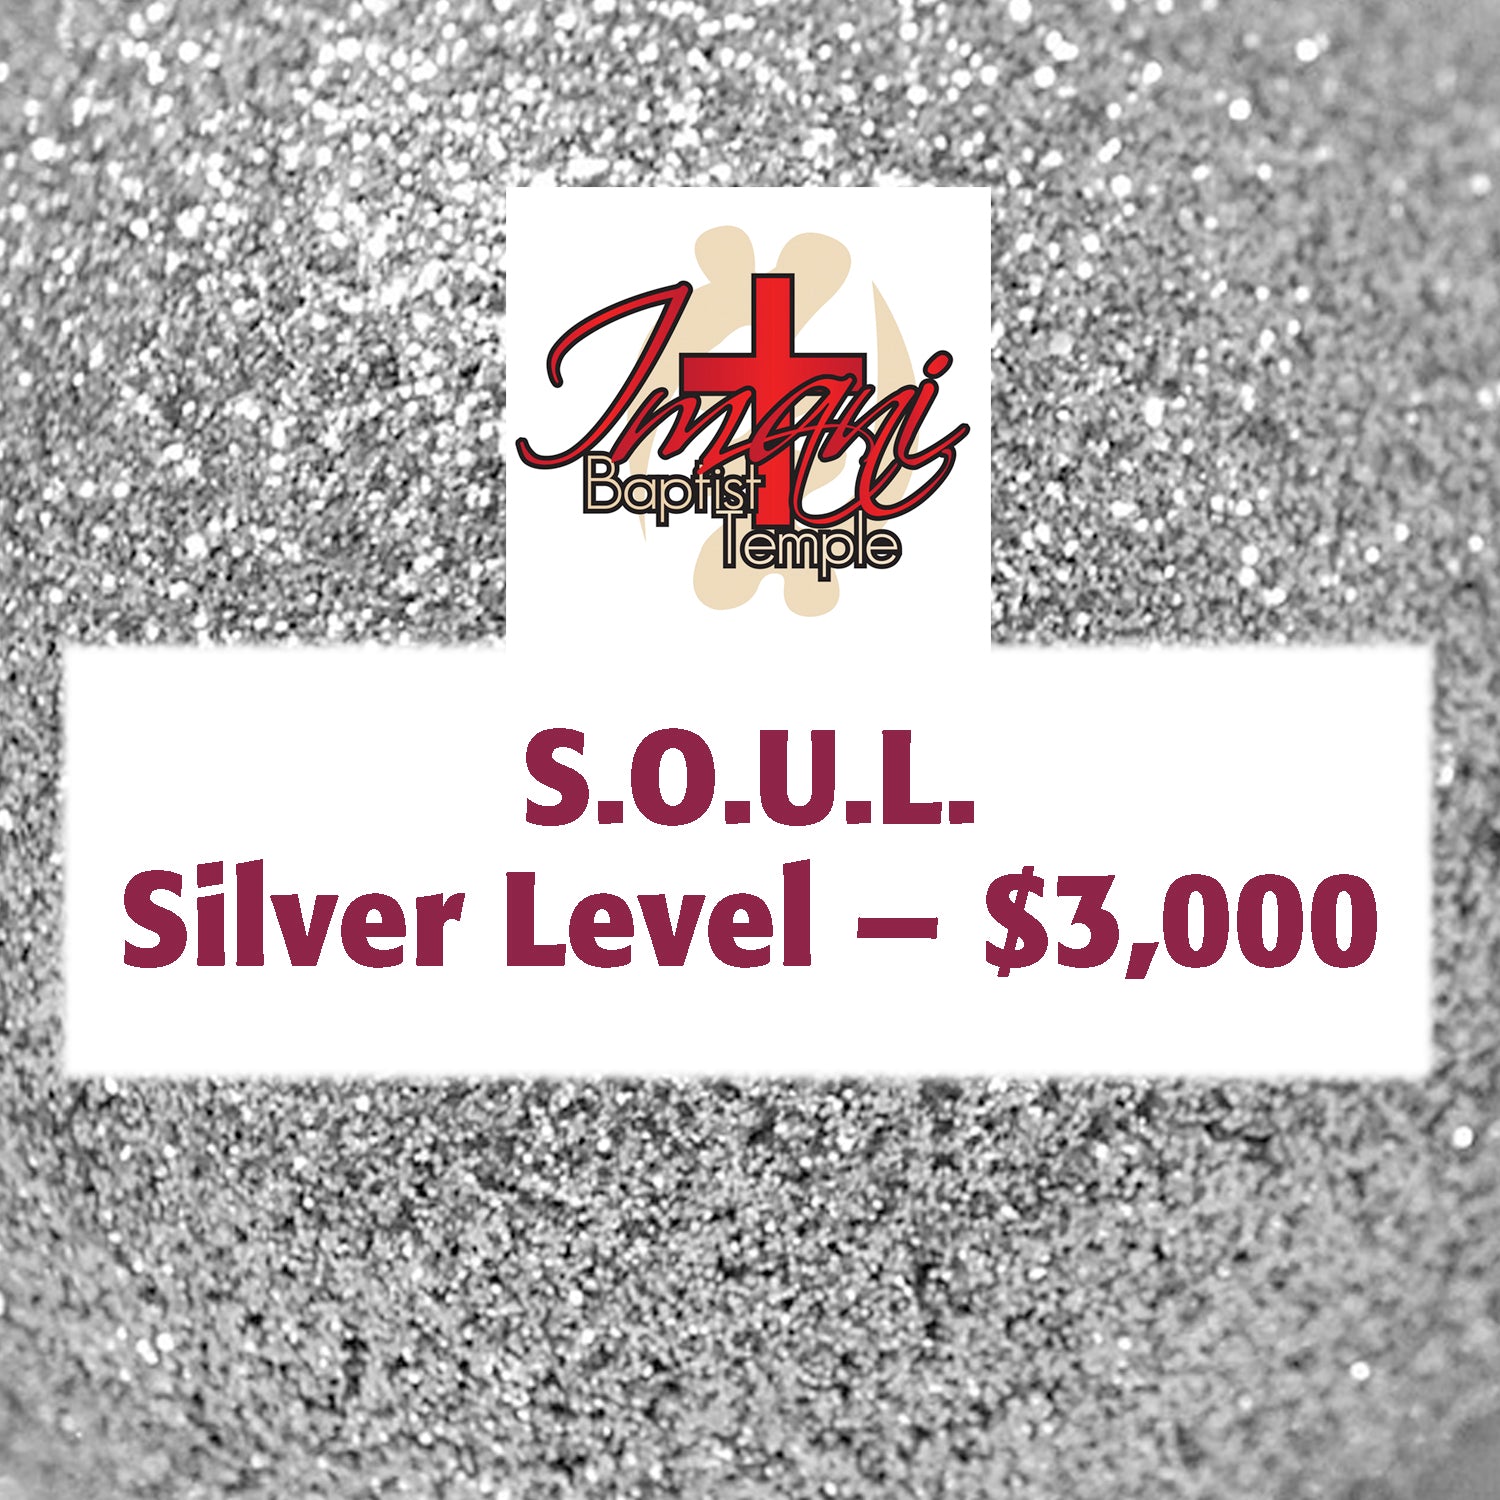 Silver Level - $3,000